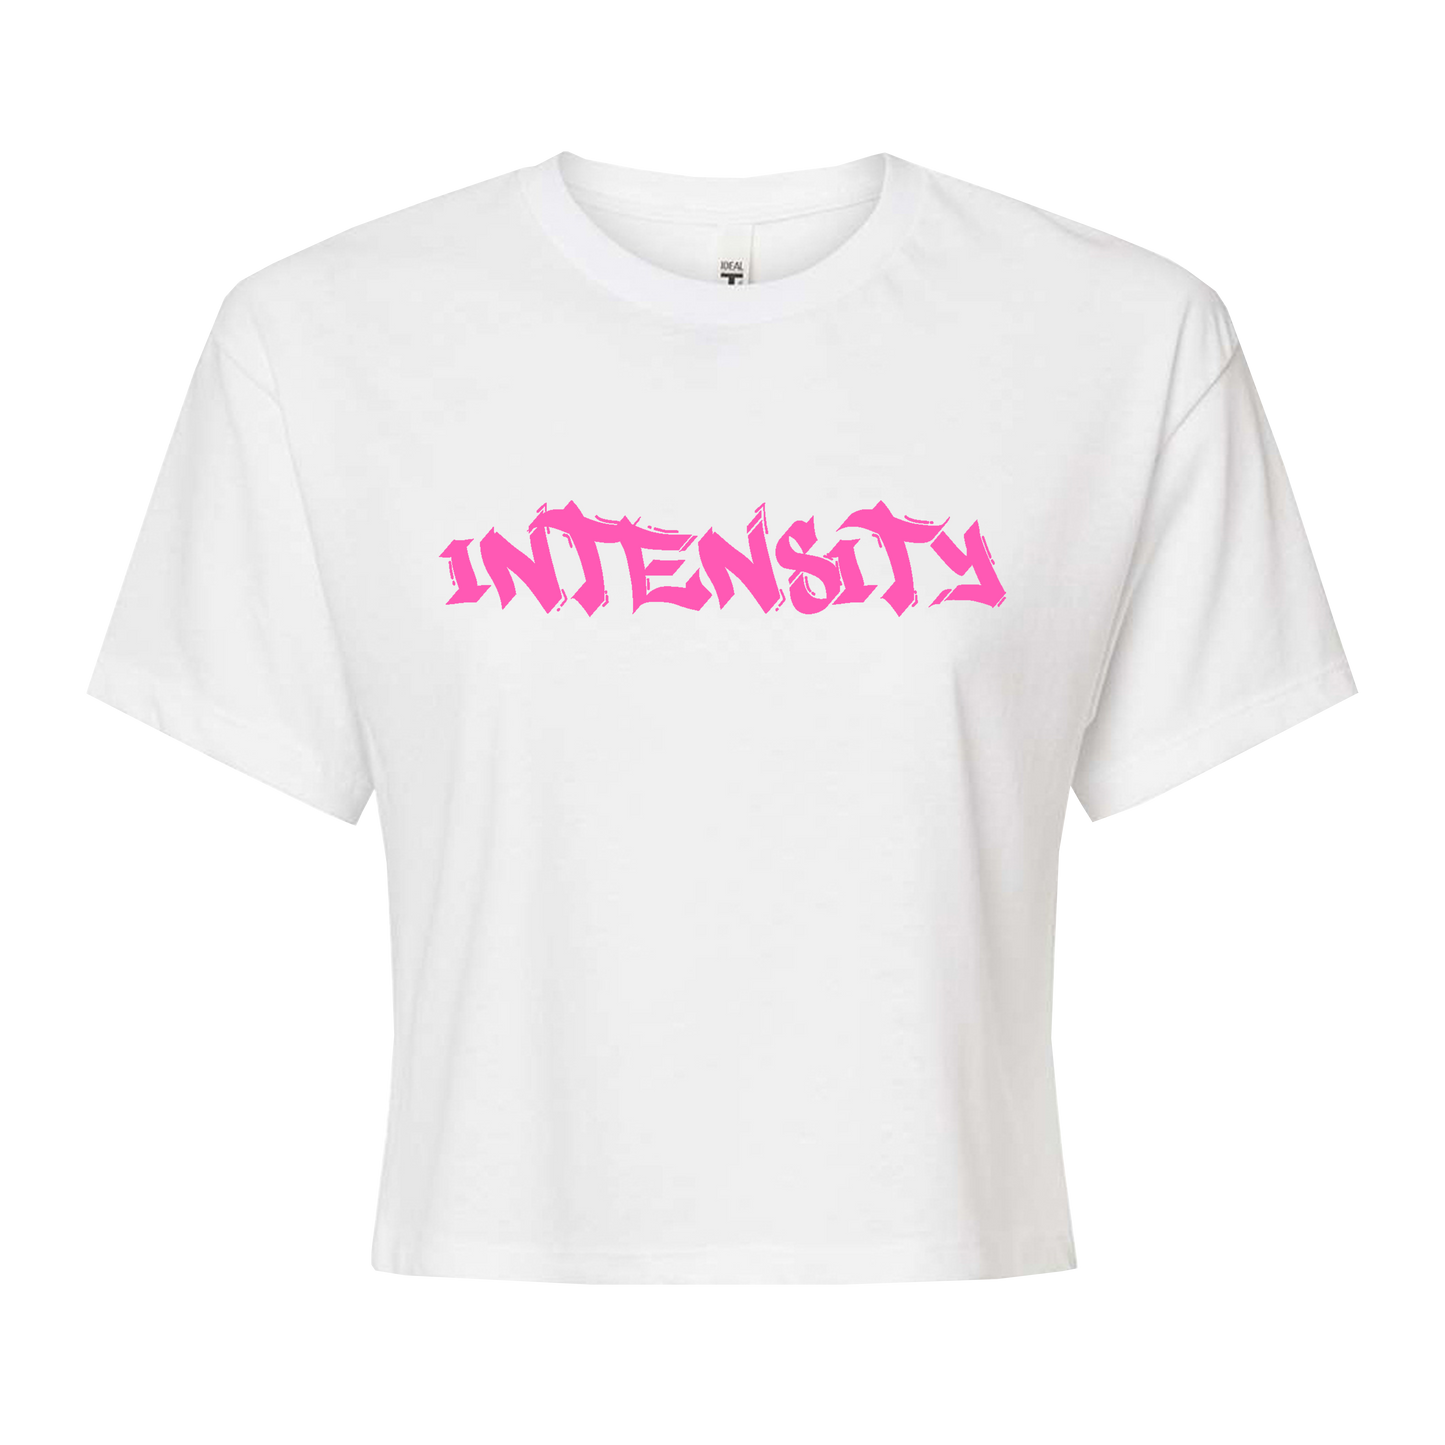 Women's "INTENSITY" Solid White Crop Top T-Shirt